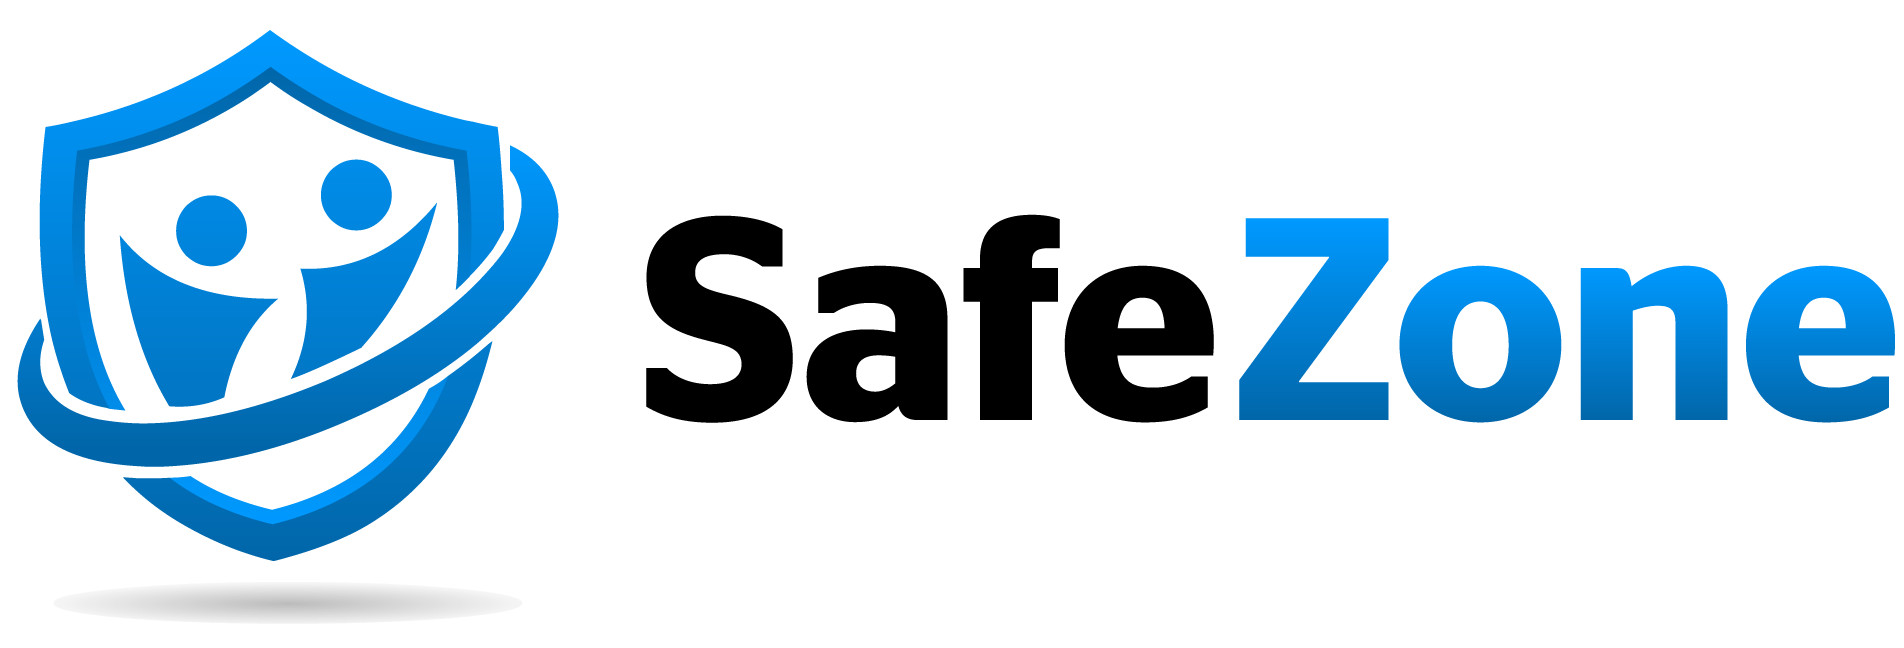 SafeZone logo 